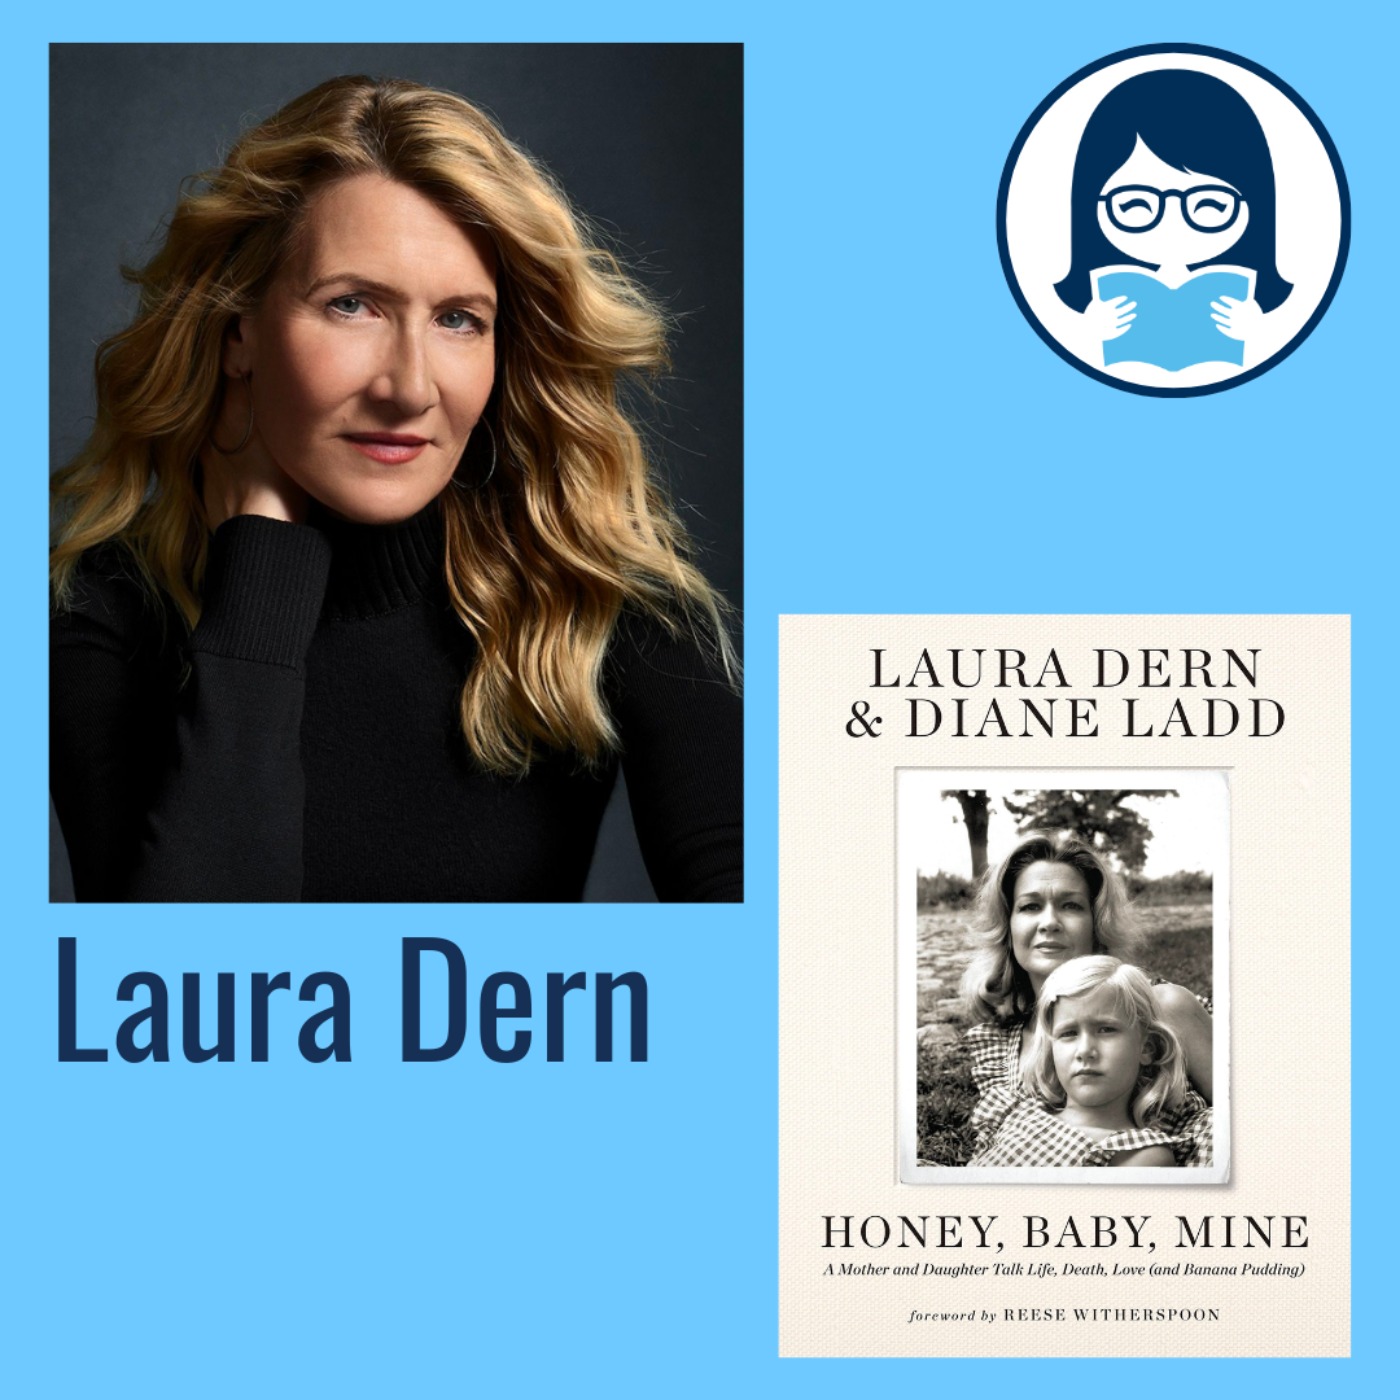 Laura Dern & Diane Ladd’s Harrowing Mother-Daughter Memoir of Poisoning